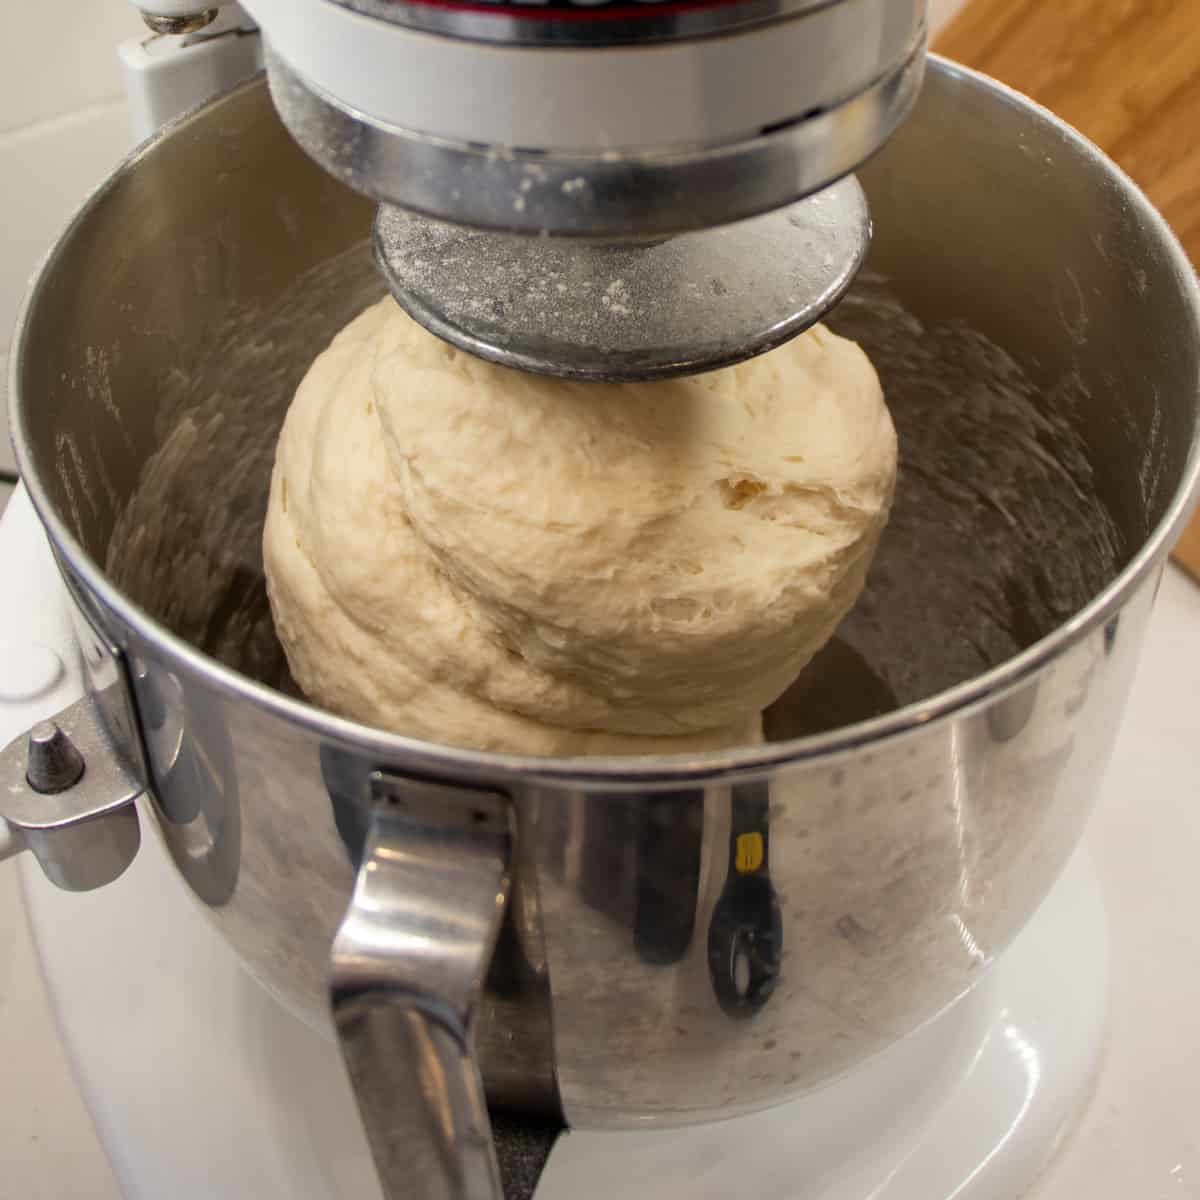 Bread dough in a metal mixing bowl.